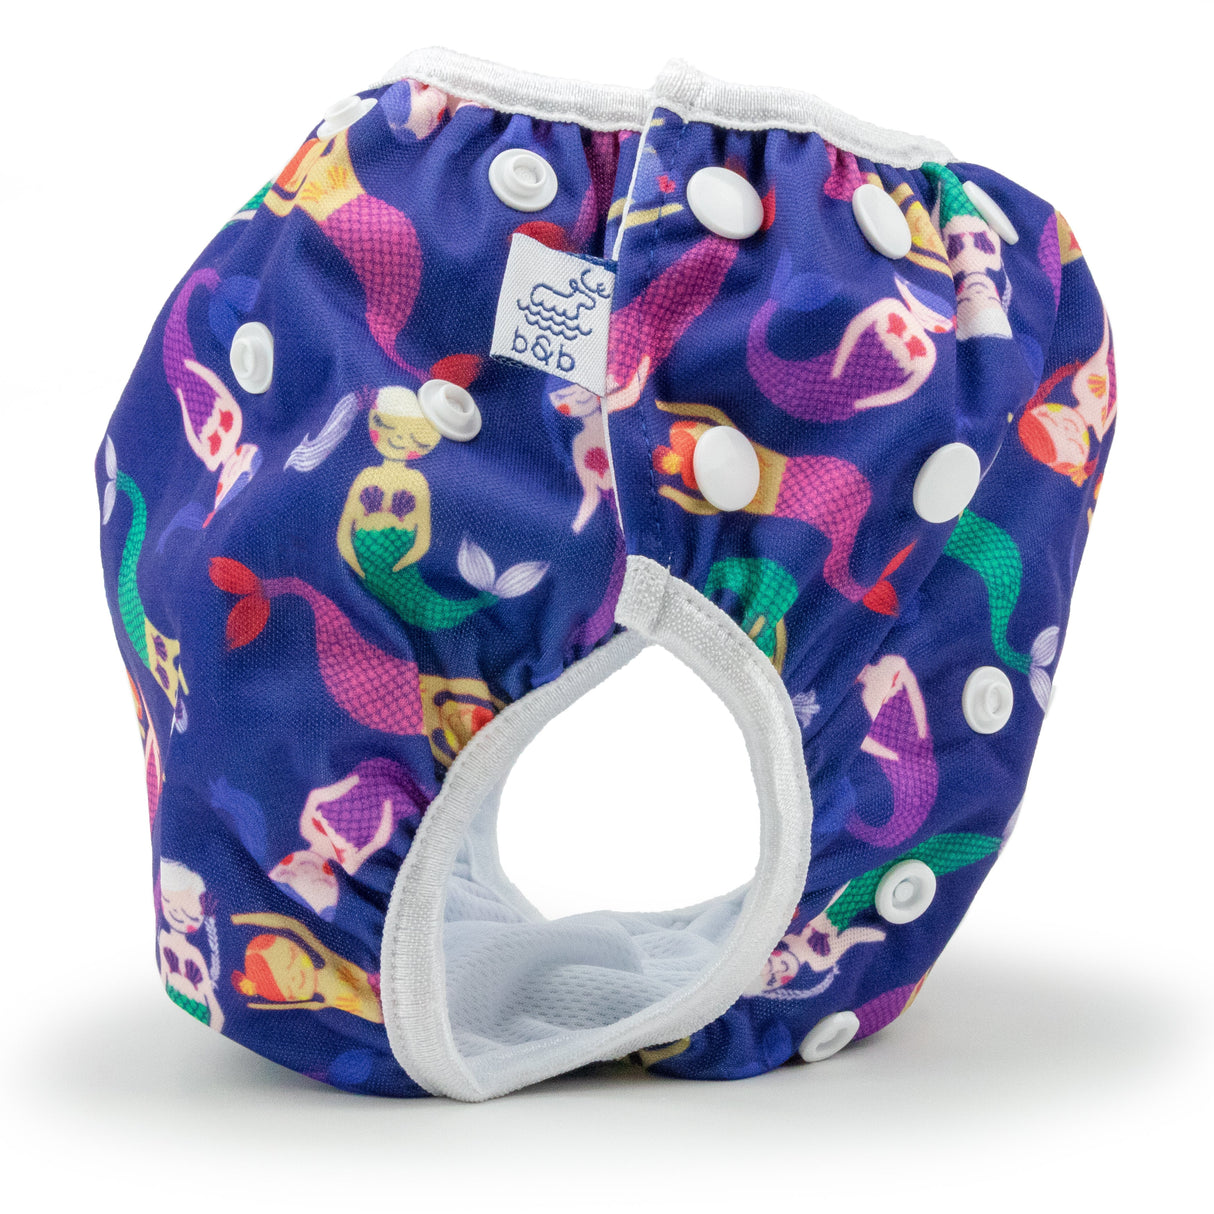 Mermaids Nageuret Premium Reusable Swim Diaper, Adjustable 0-3 Years by Beau & Belle Littles